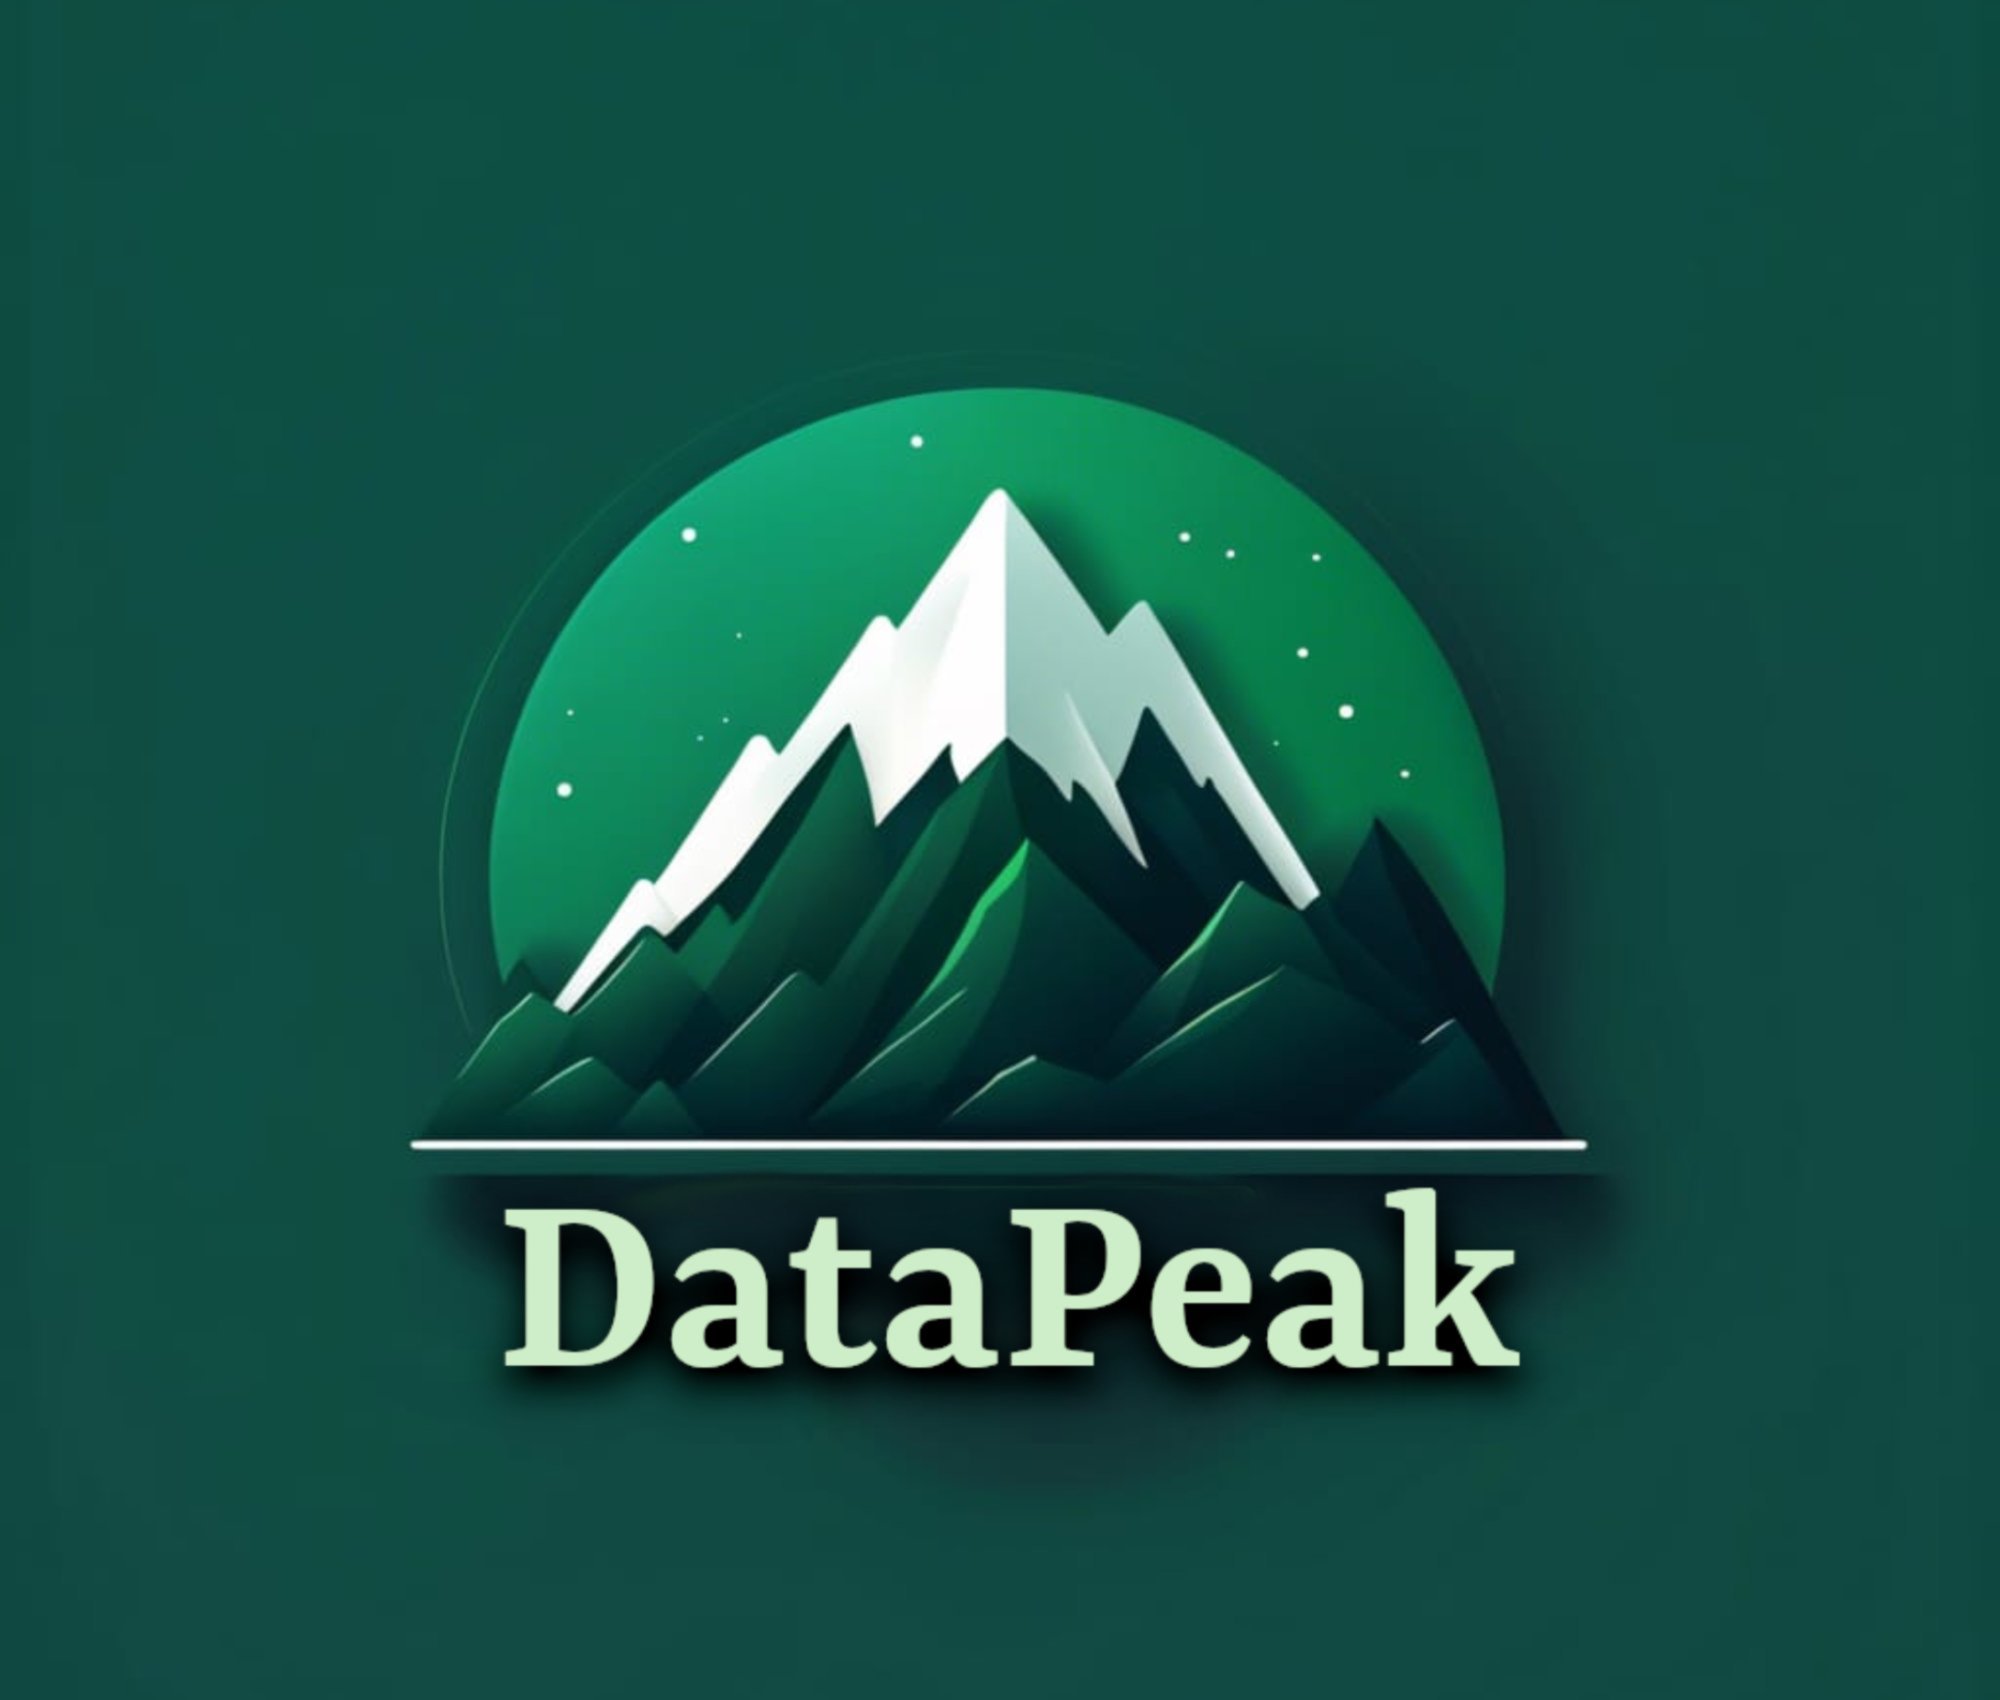 DataPeak